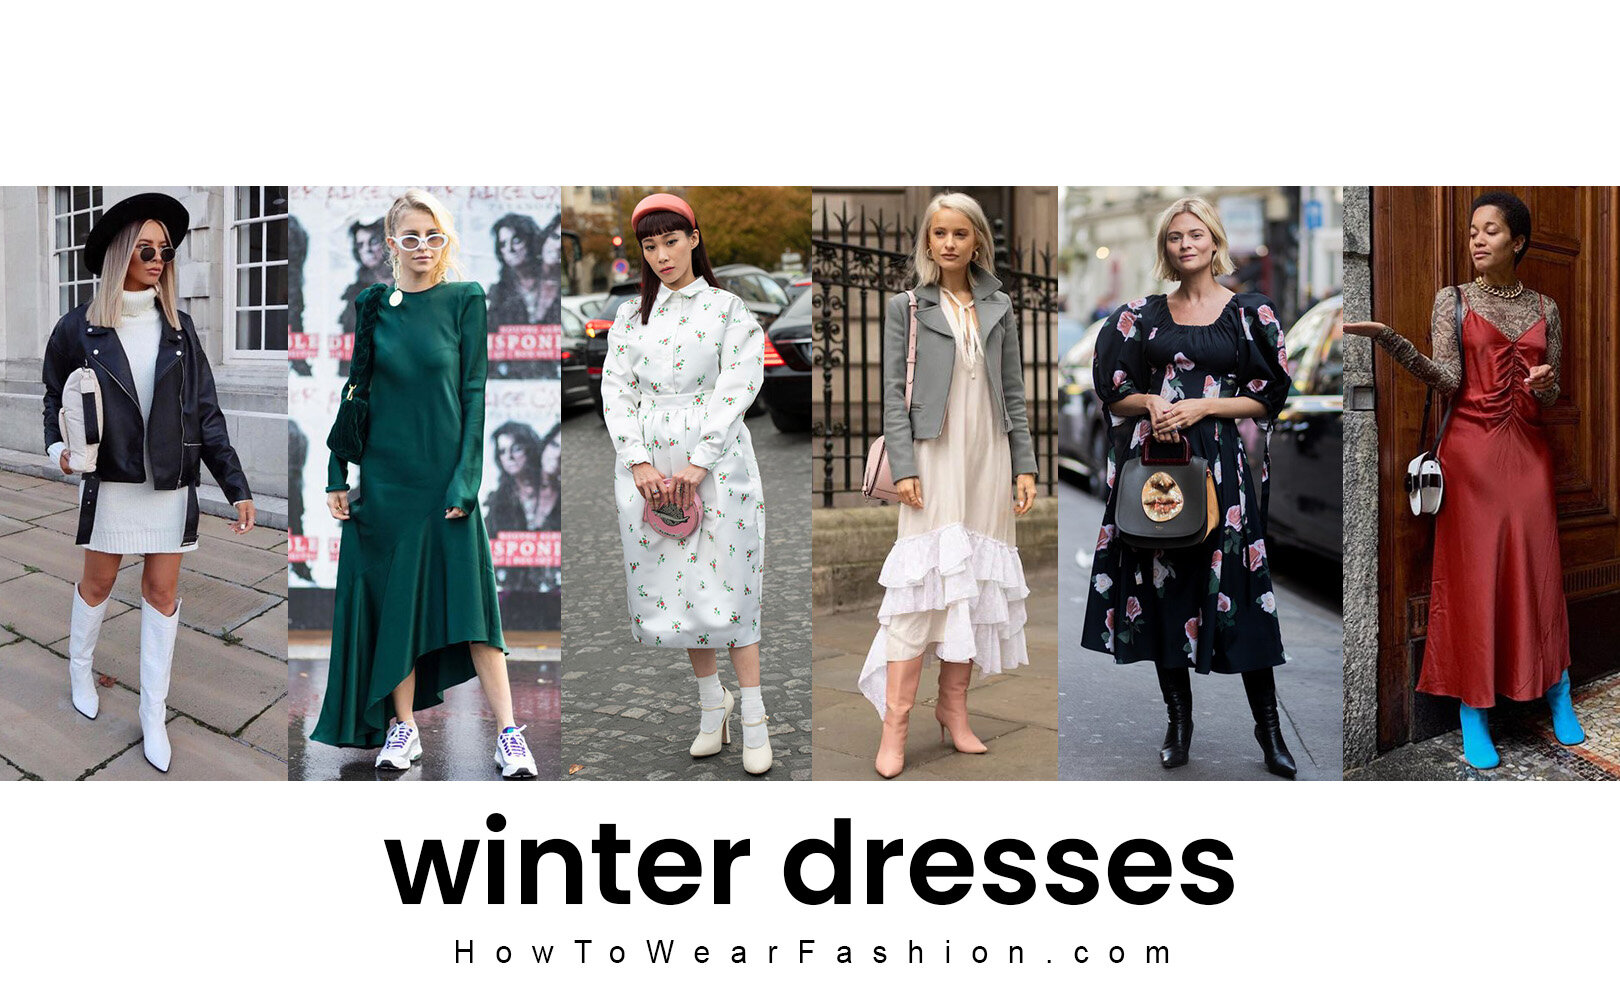 Winter dresses  HOWTOWEAR Fashion